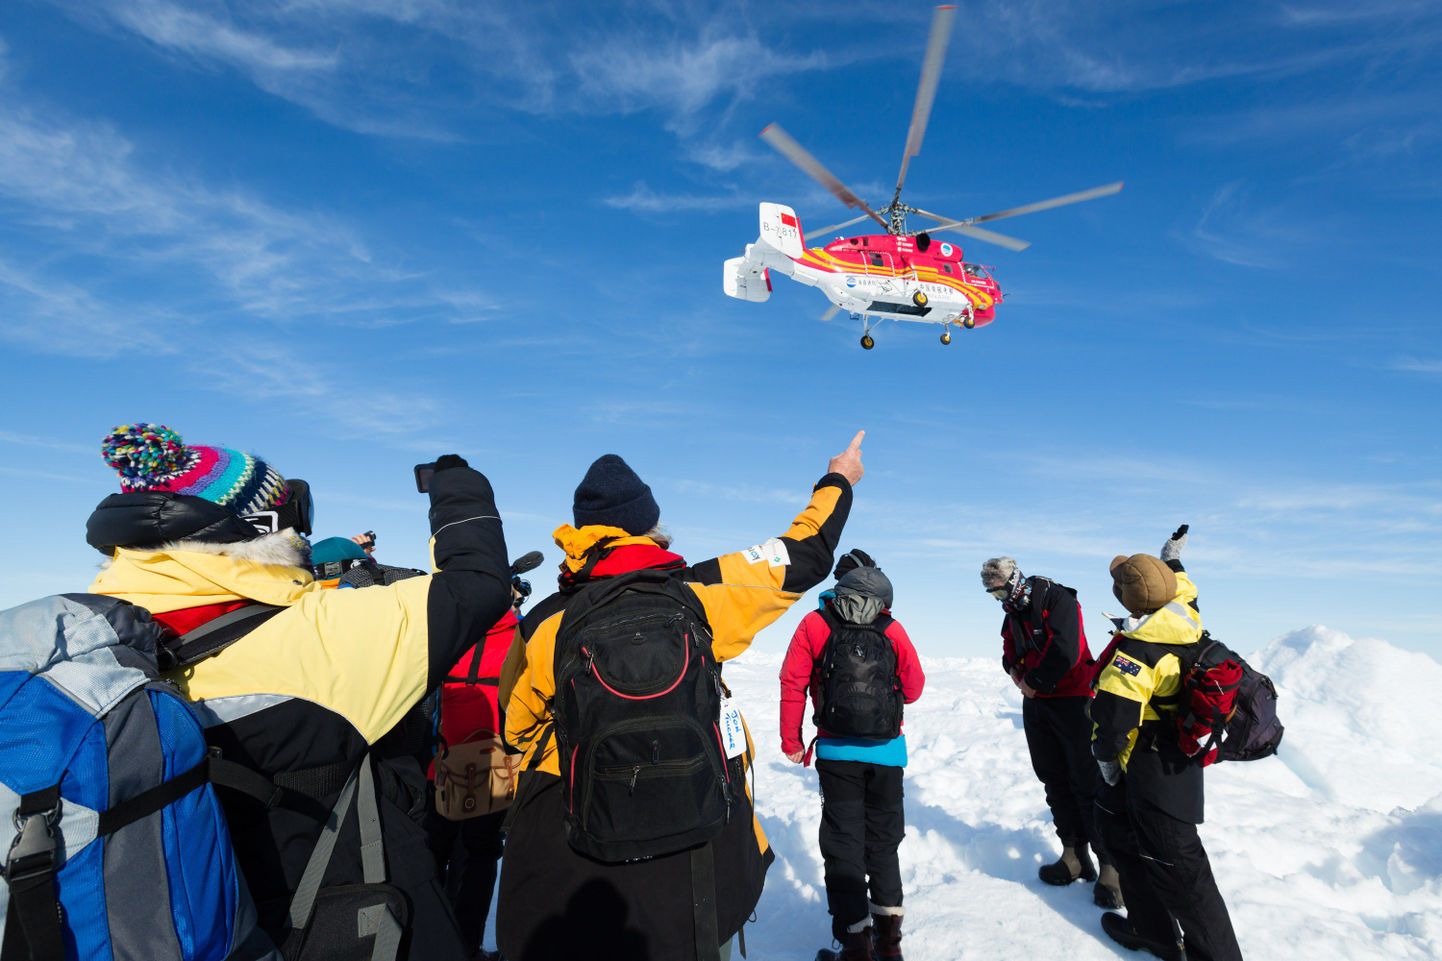 Hiinqa jäämurdjalt Xue Long pärit helikopter tõi Akademik Šokalski pardalt ära kõik 52 reisijat.